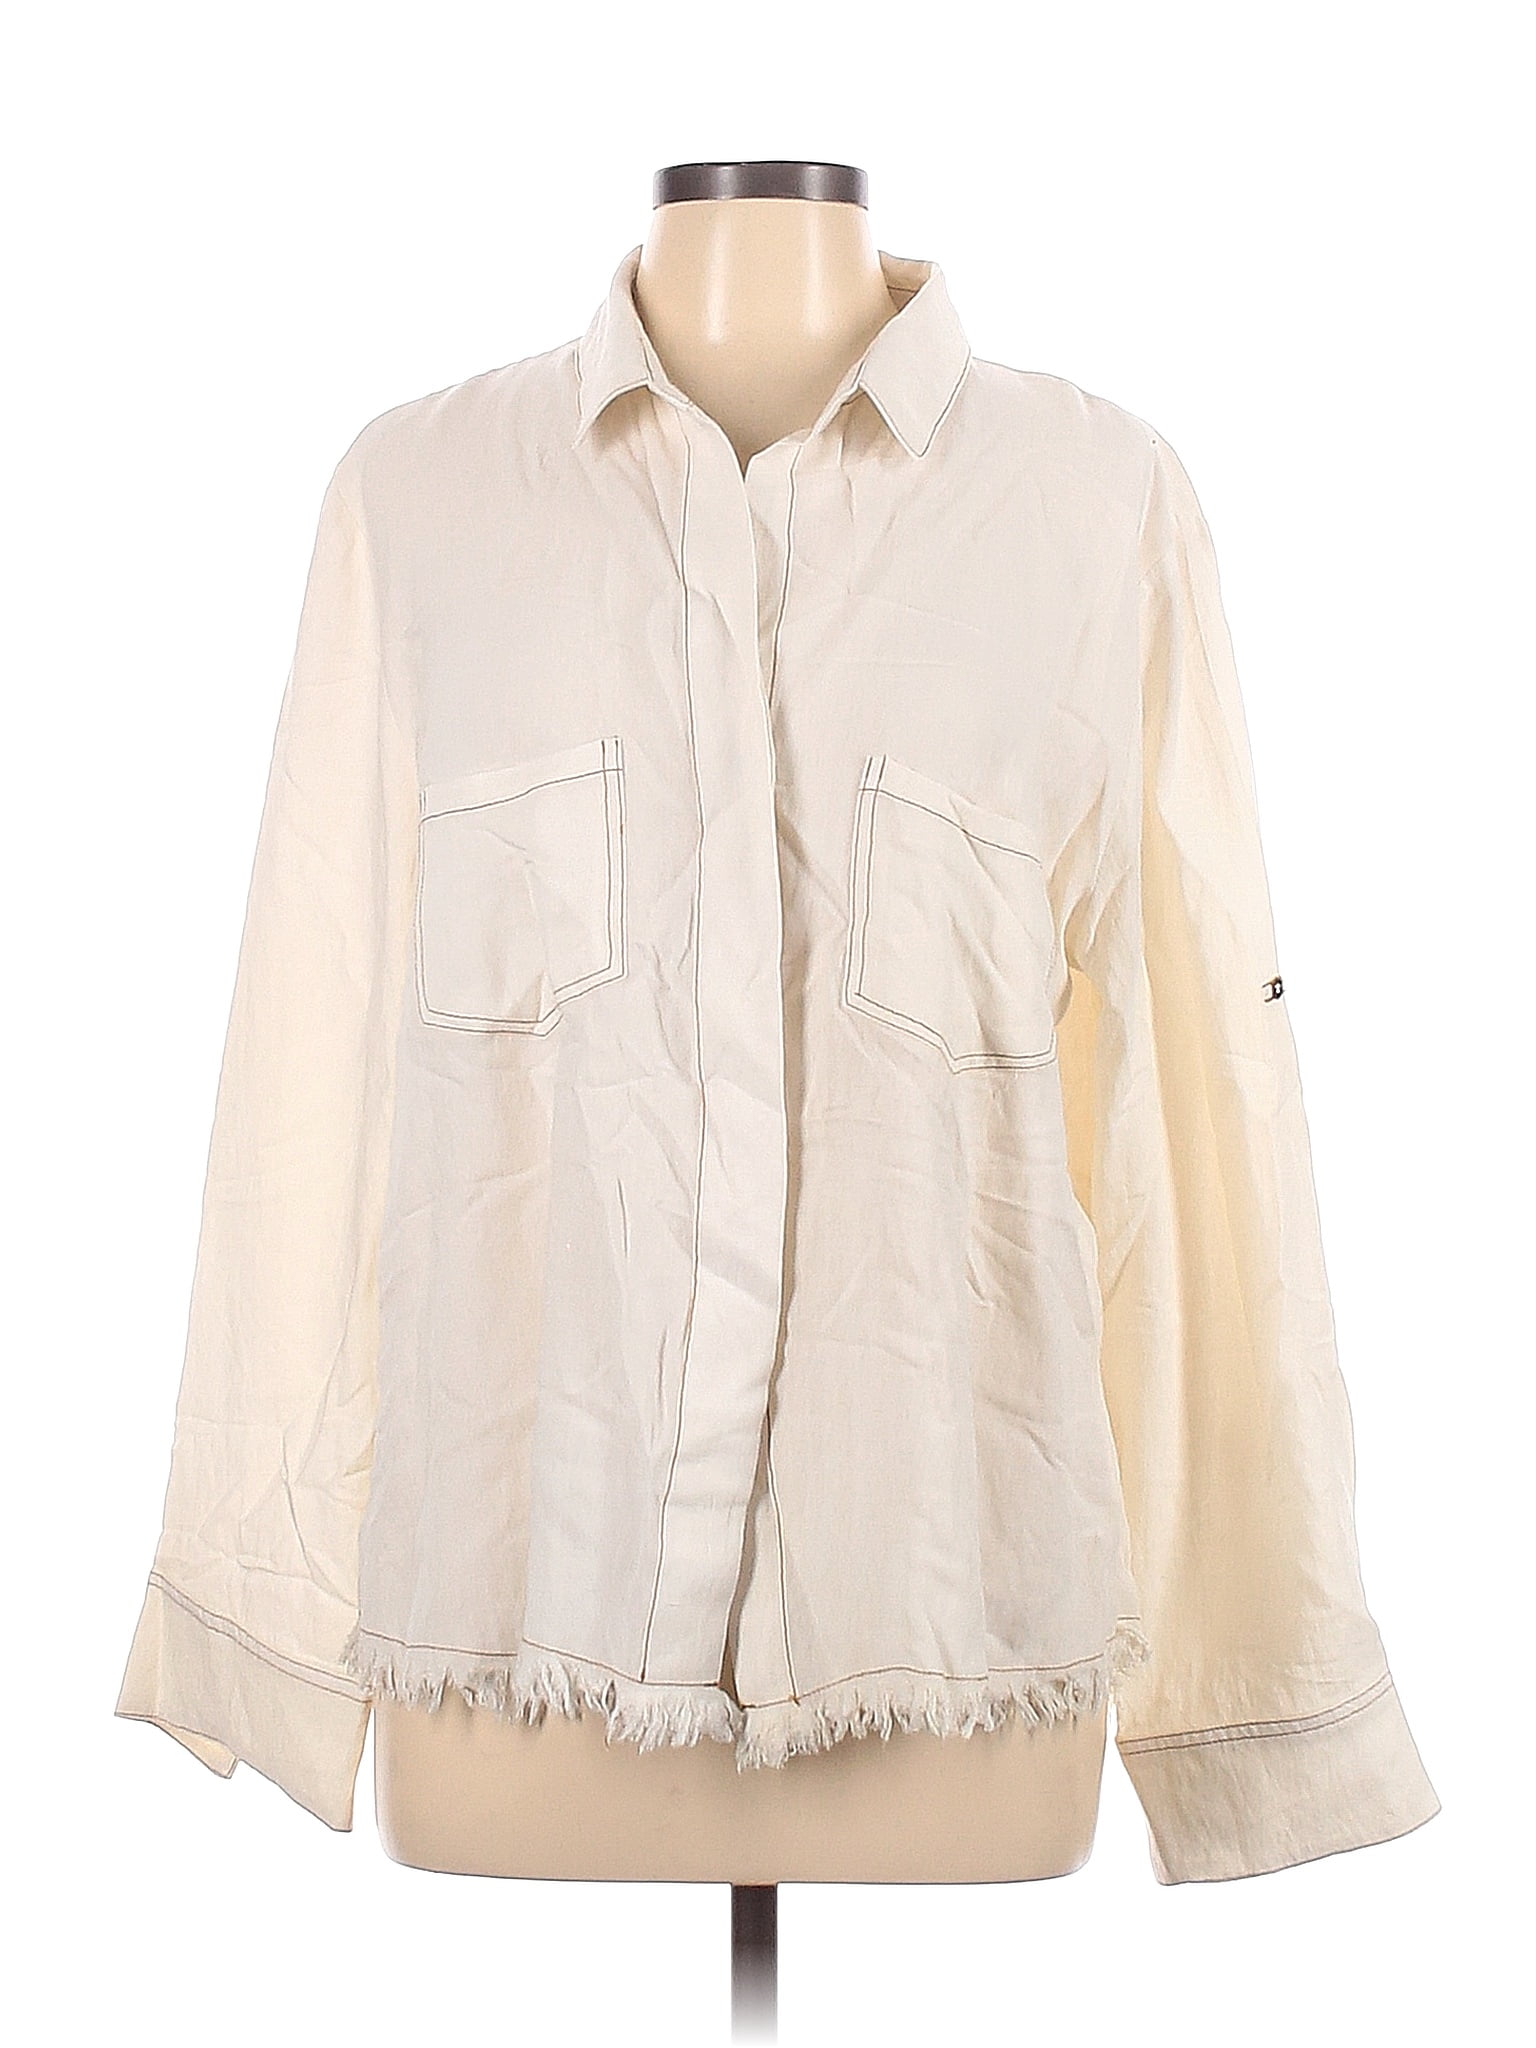 Umgee Ivory Long Sleeve Button-Down Shirt Size L - 62% off | thredUP